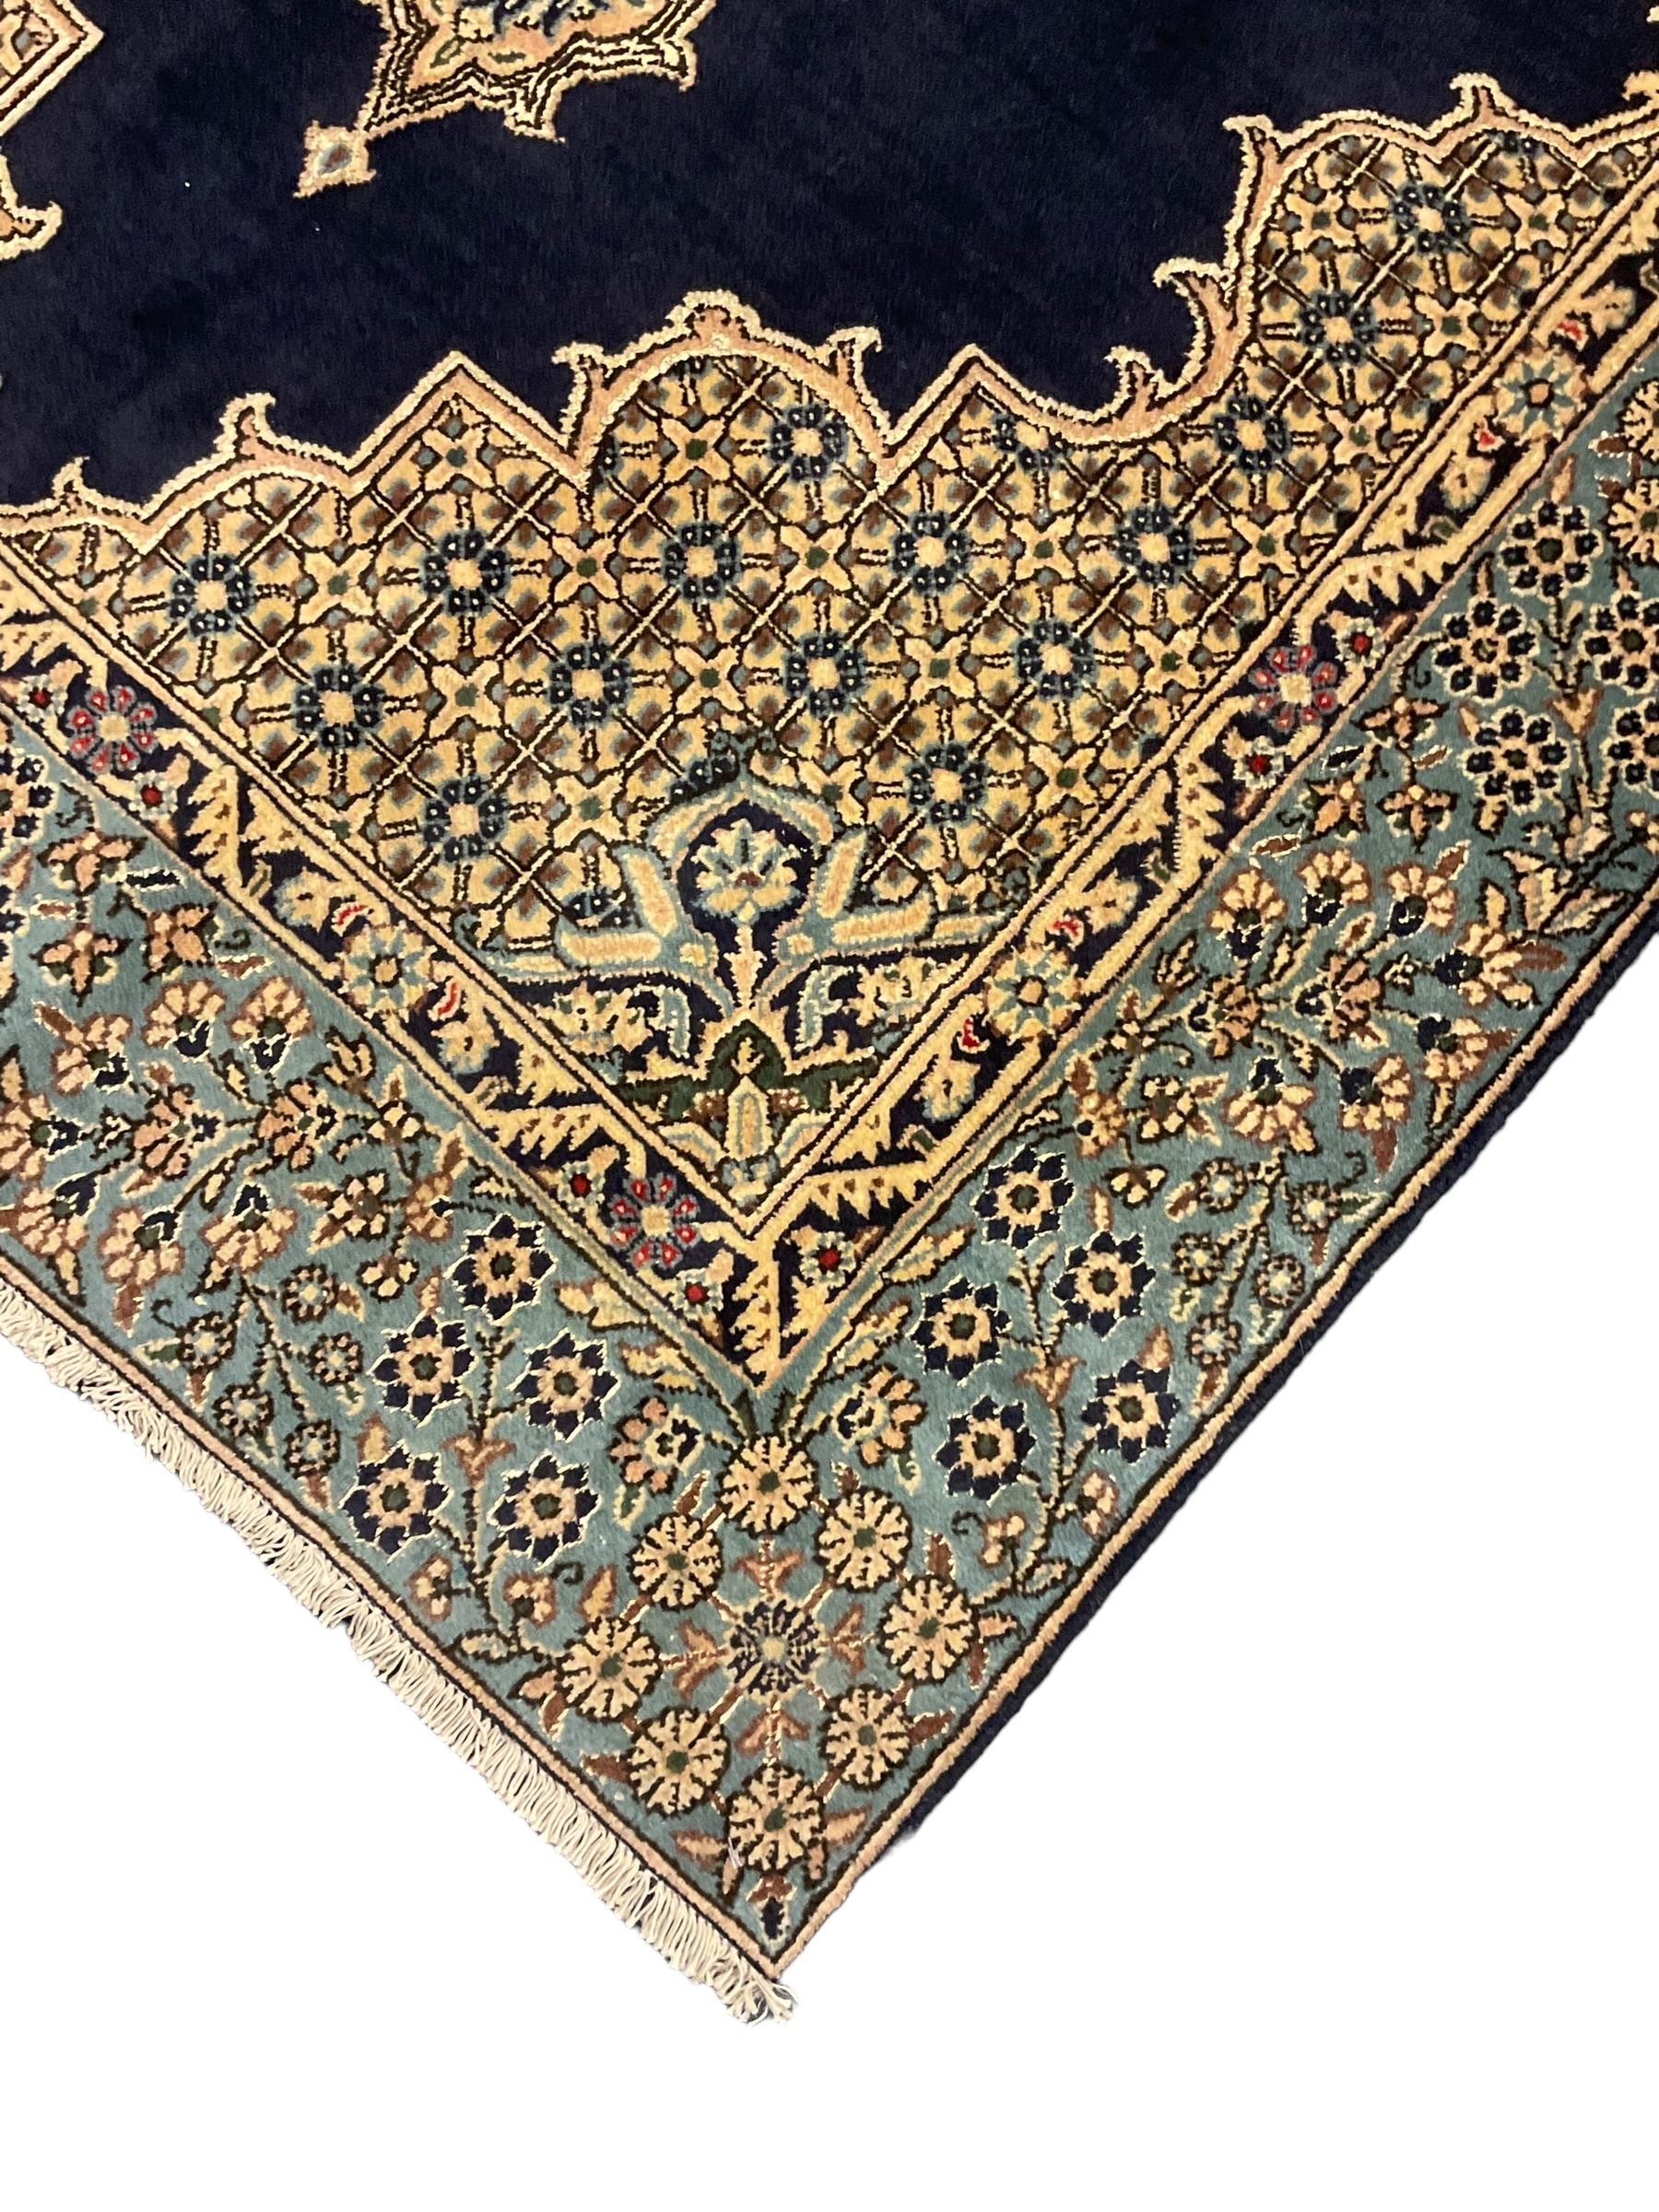 Central Persian Qum indigo ground rug with silk inlay - Image 4 of 5